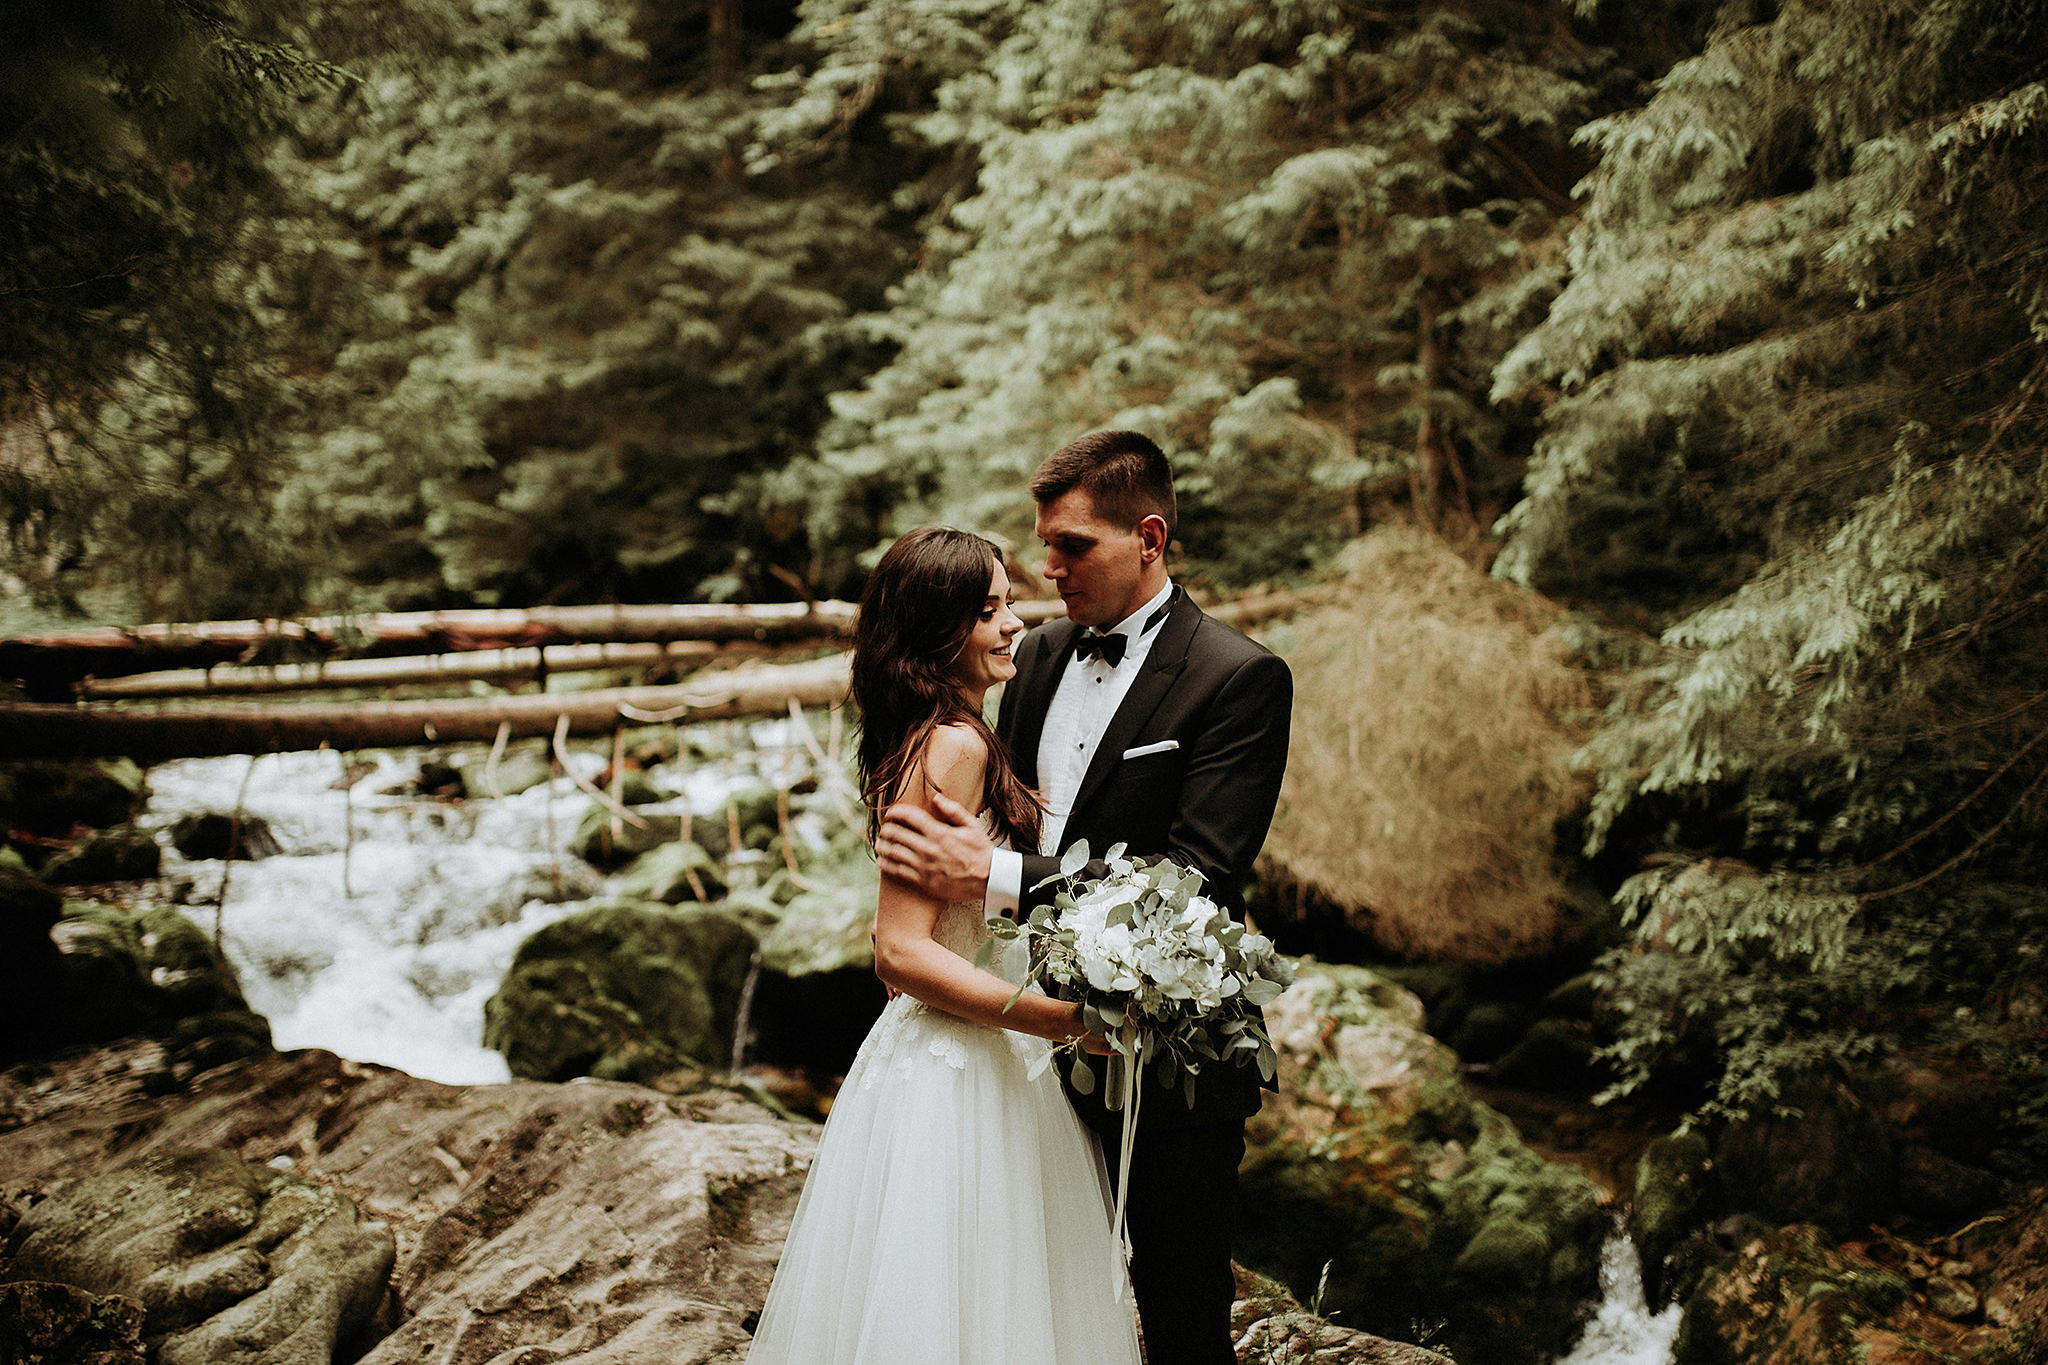 wedding photo shooting in mountains poland